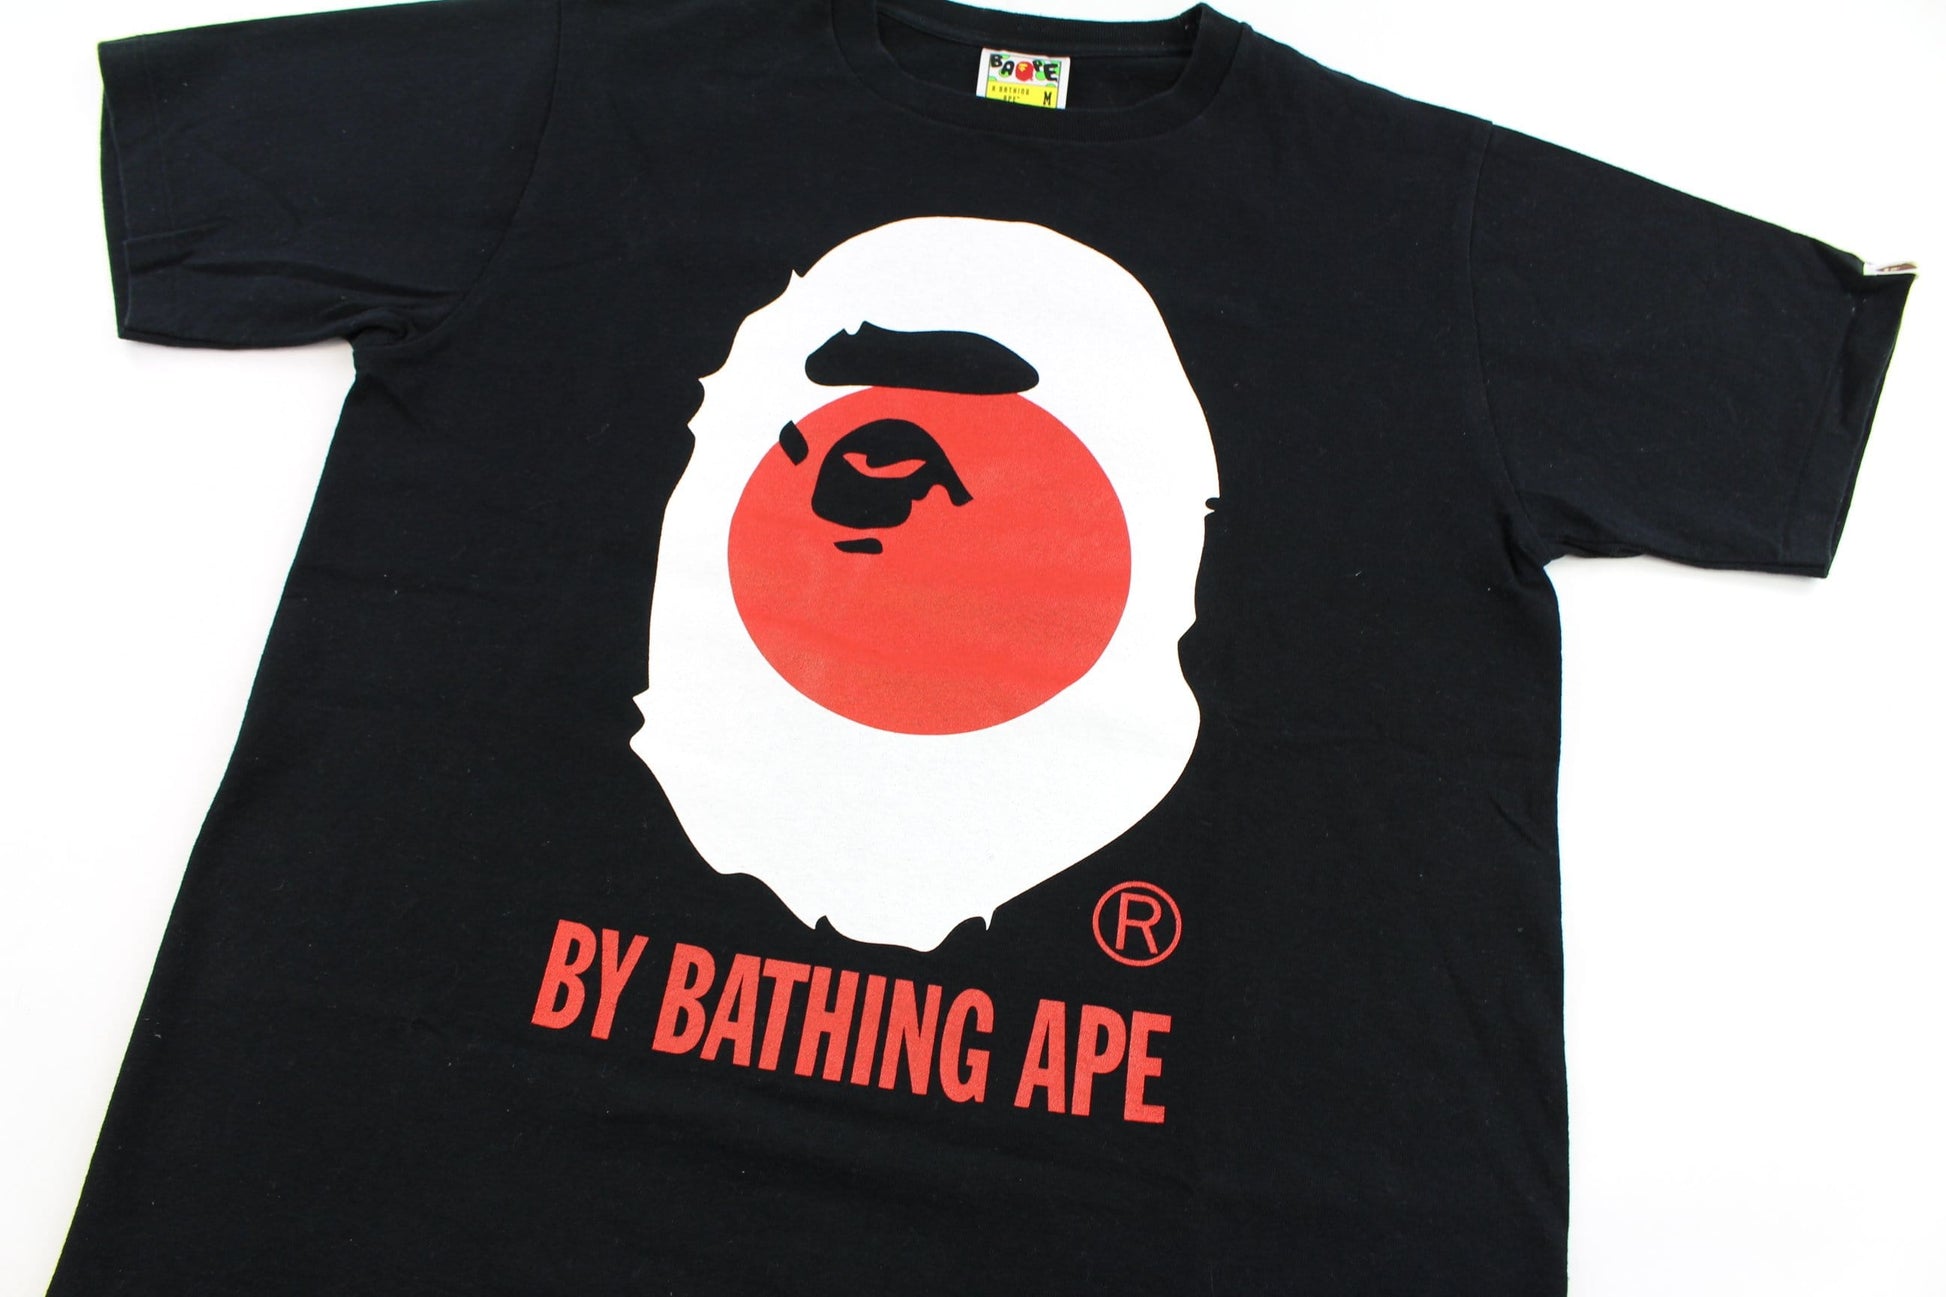 Bape Big ape Japan Logo Tee Black - SARUUK